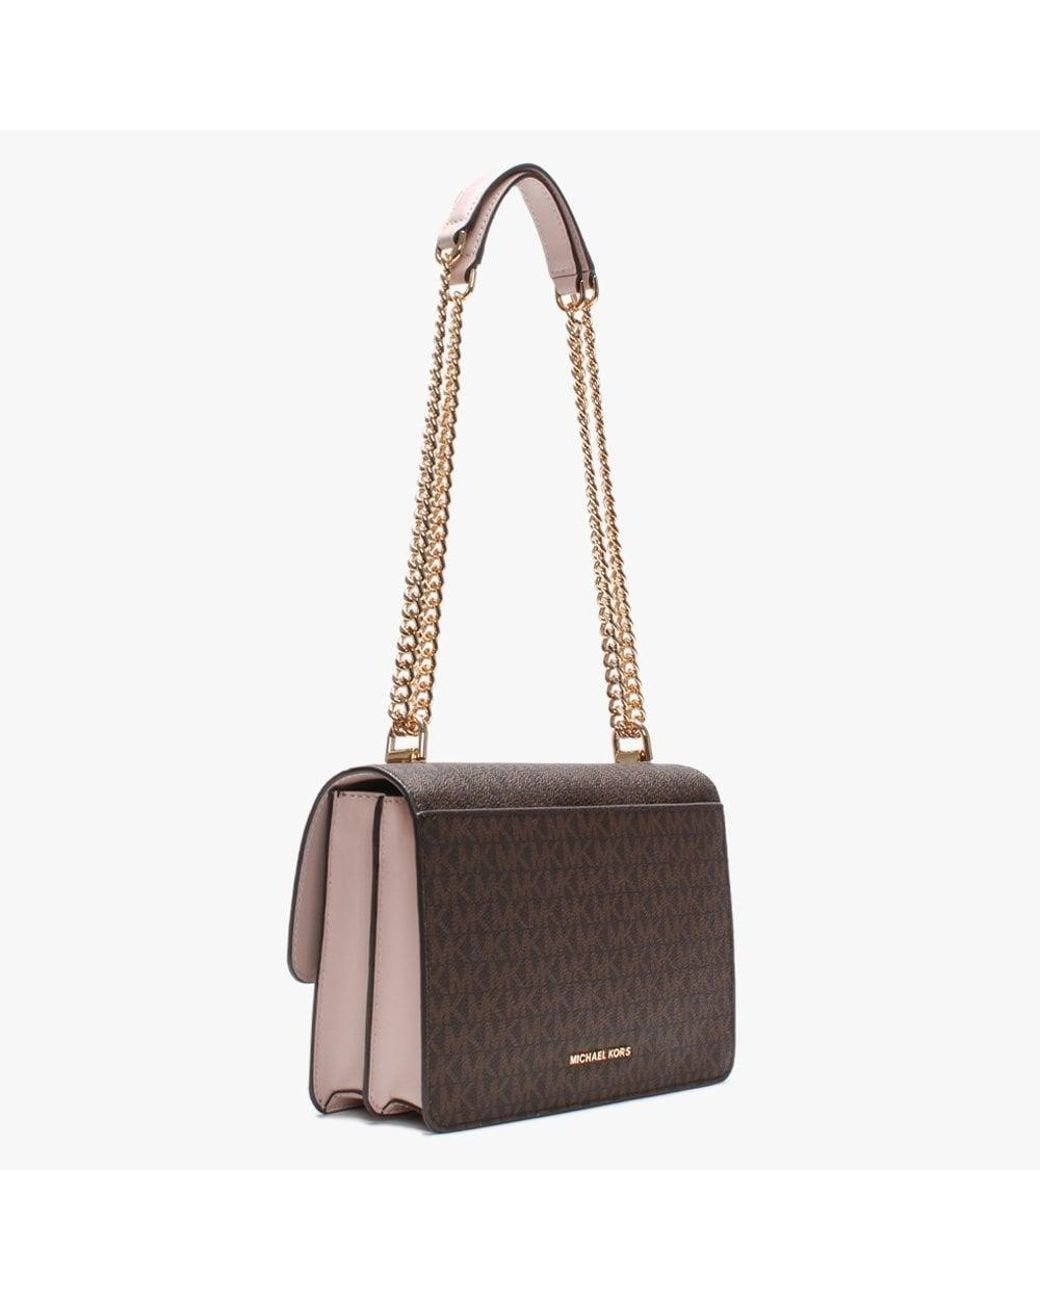 Michael Kors Bedford Medium Pebbled Soft Pink Leather Tote Handbag Purse  New | eBay